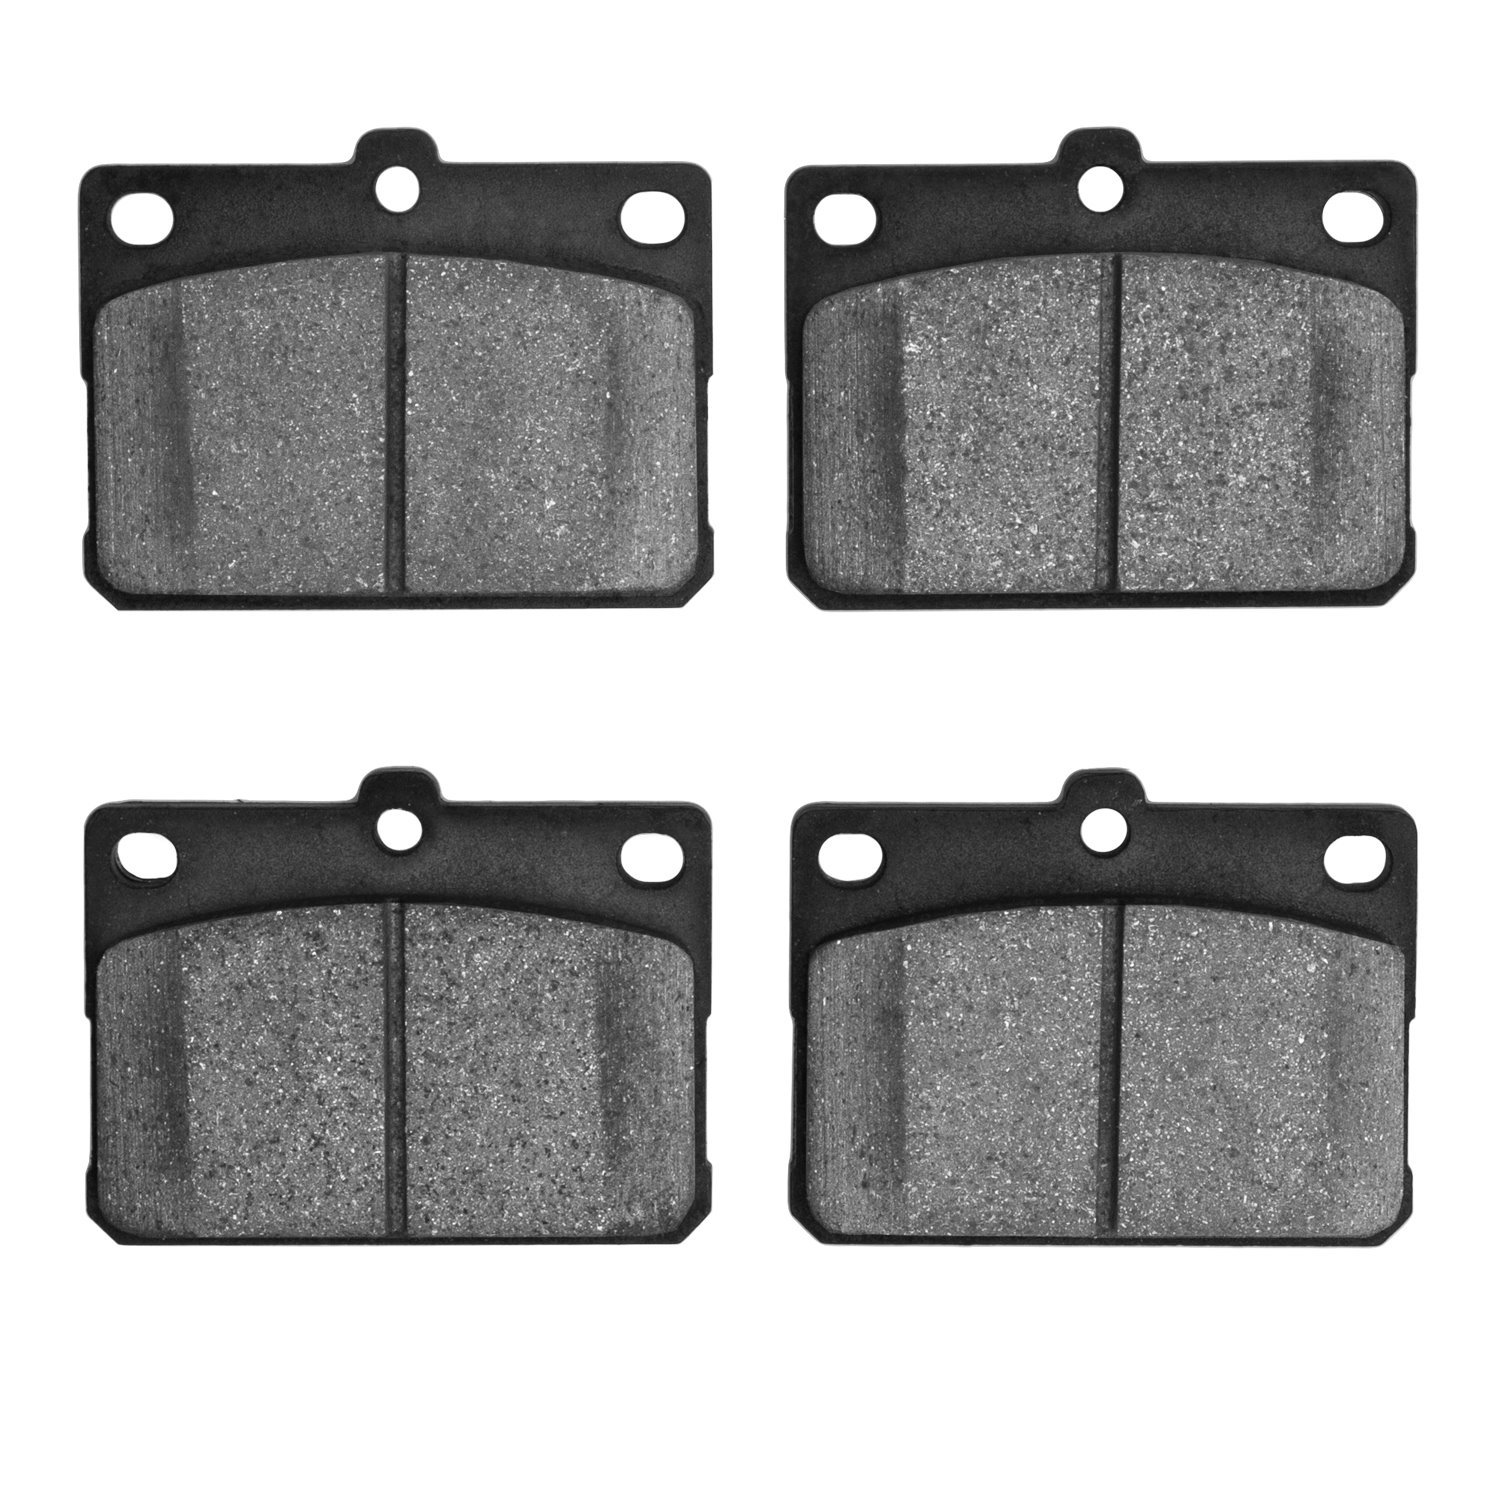 1310-0101-00 3000-Series Ceramic Brake Pads, 1972-1987 Multiple Makes/Models, Position: Front